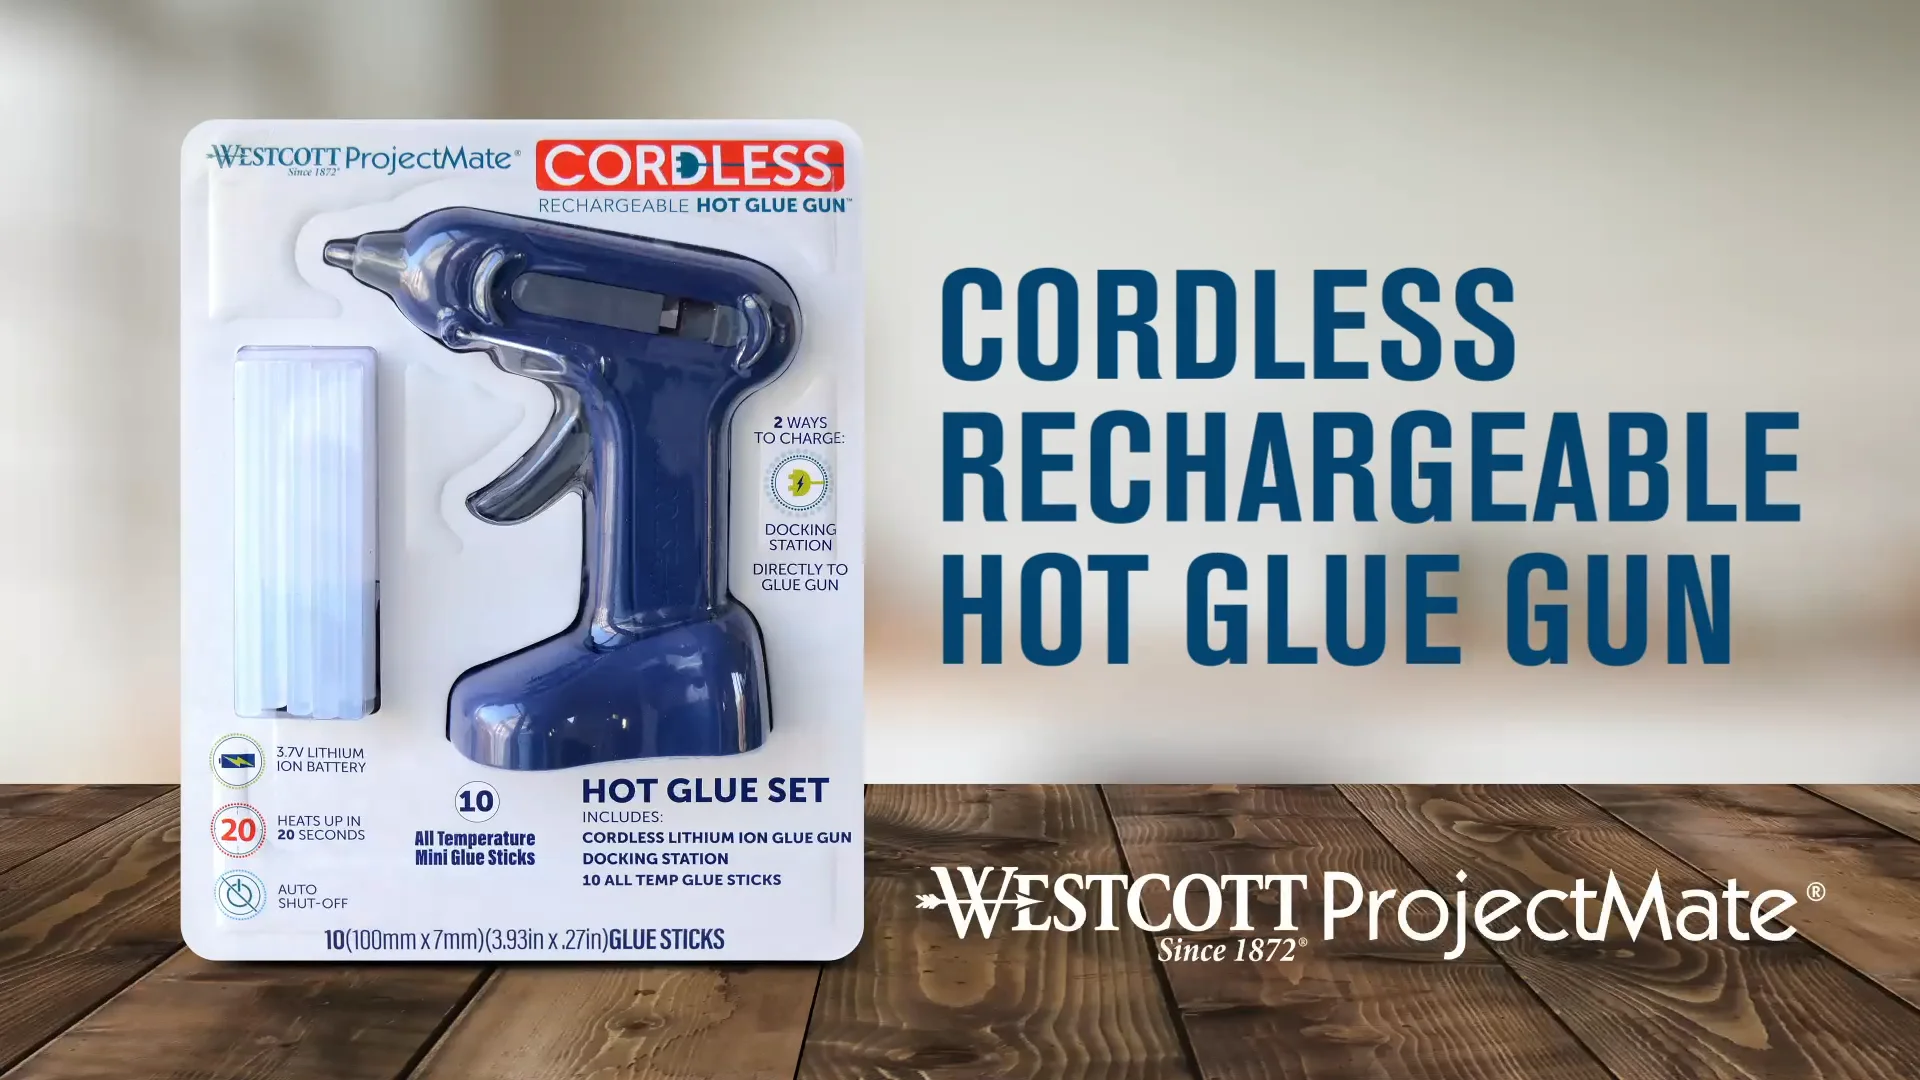 Westcott Cordless Hot Glue Gun on Vimeo